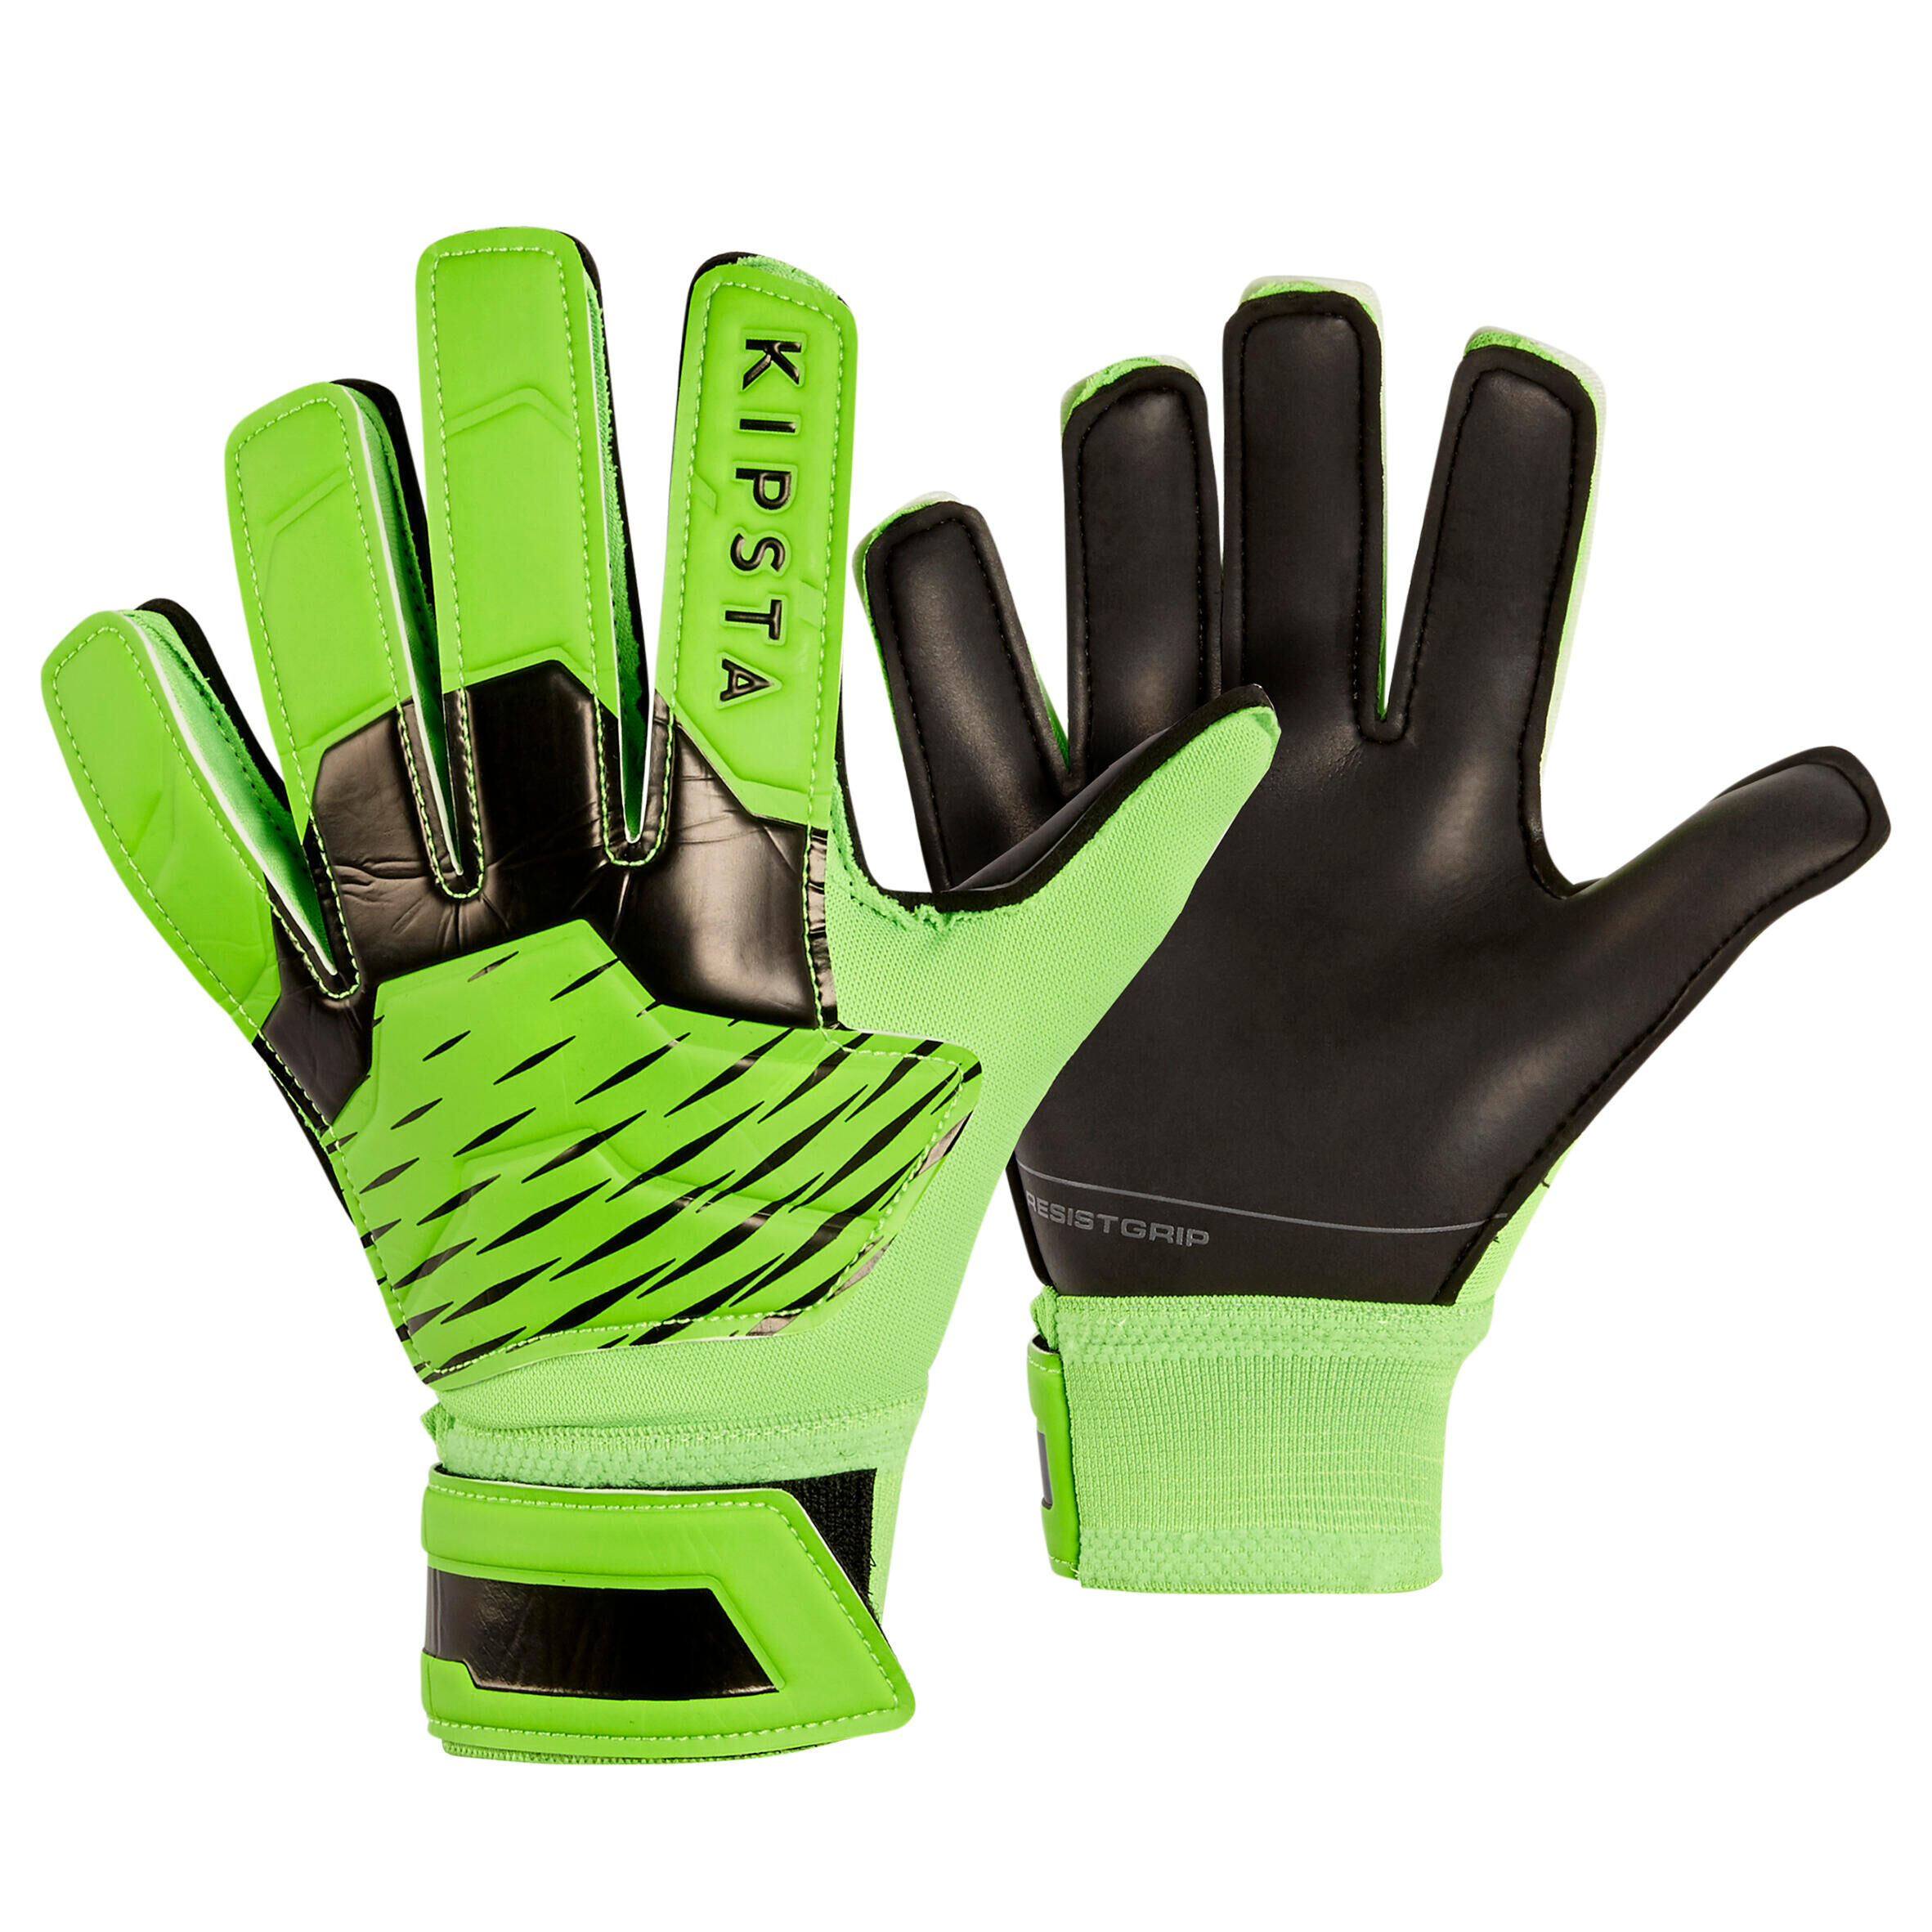 KIPSTA Kids' Football Goalkeeper Gloves F100 Resist - Green/Black